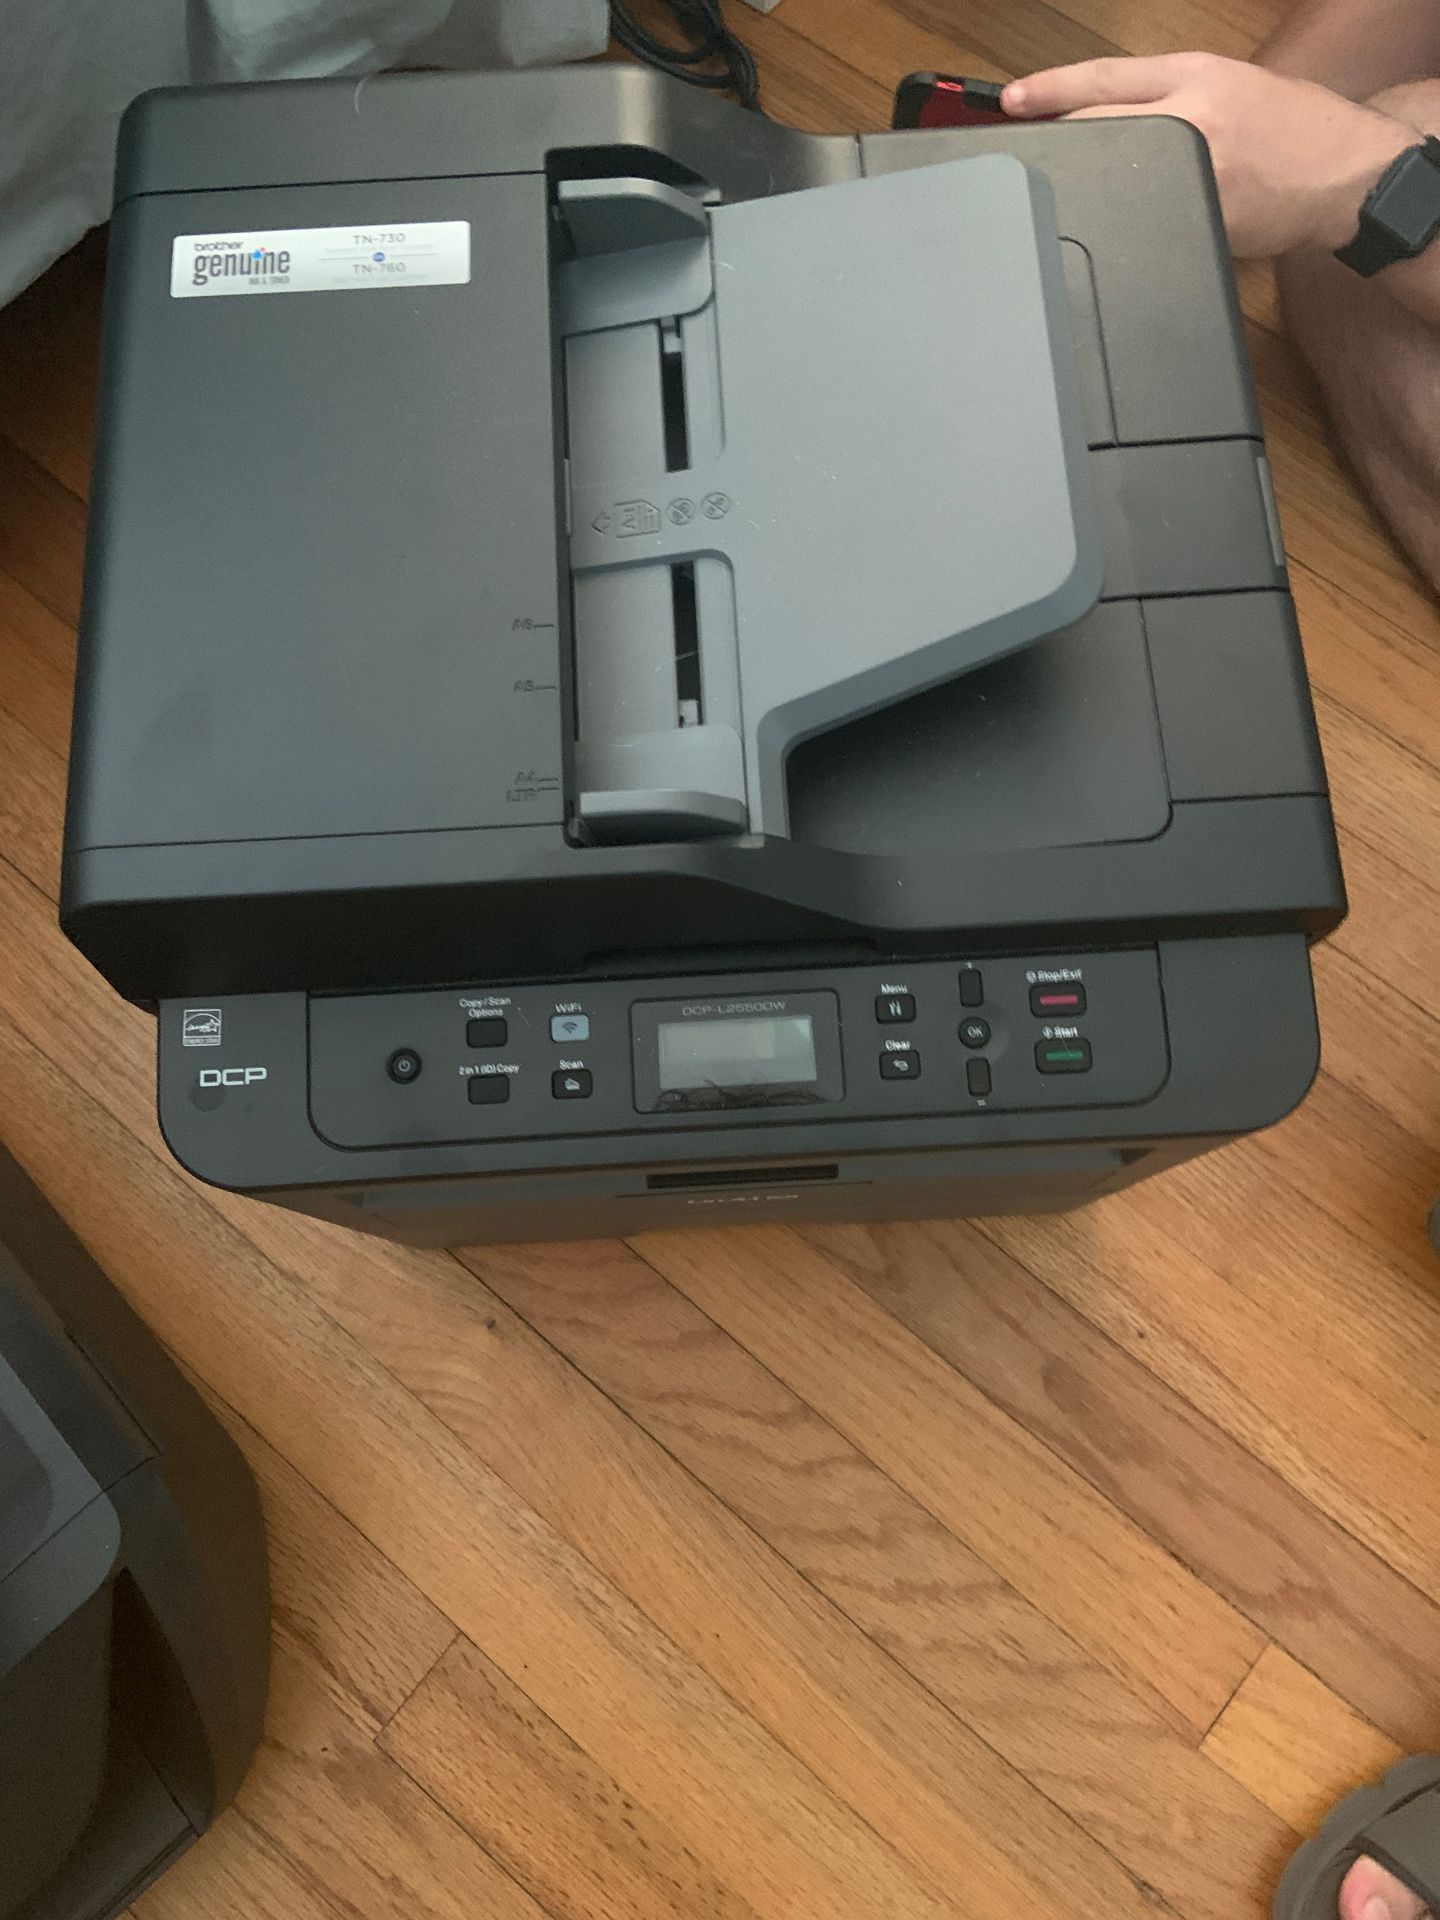 Dpc printer